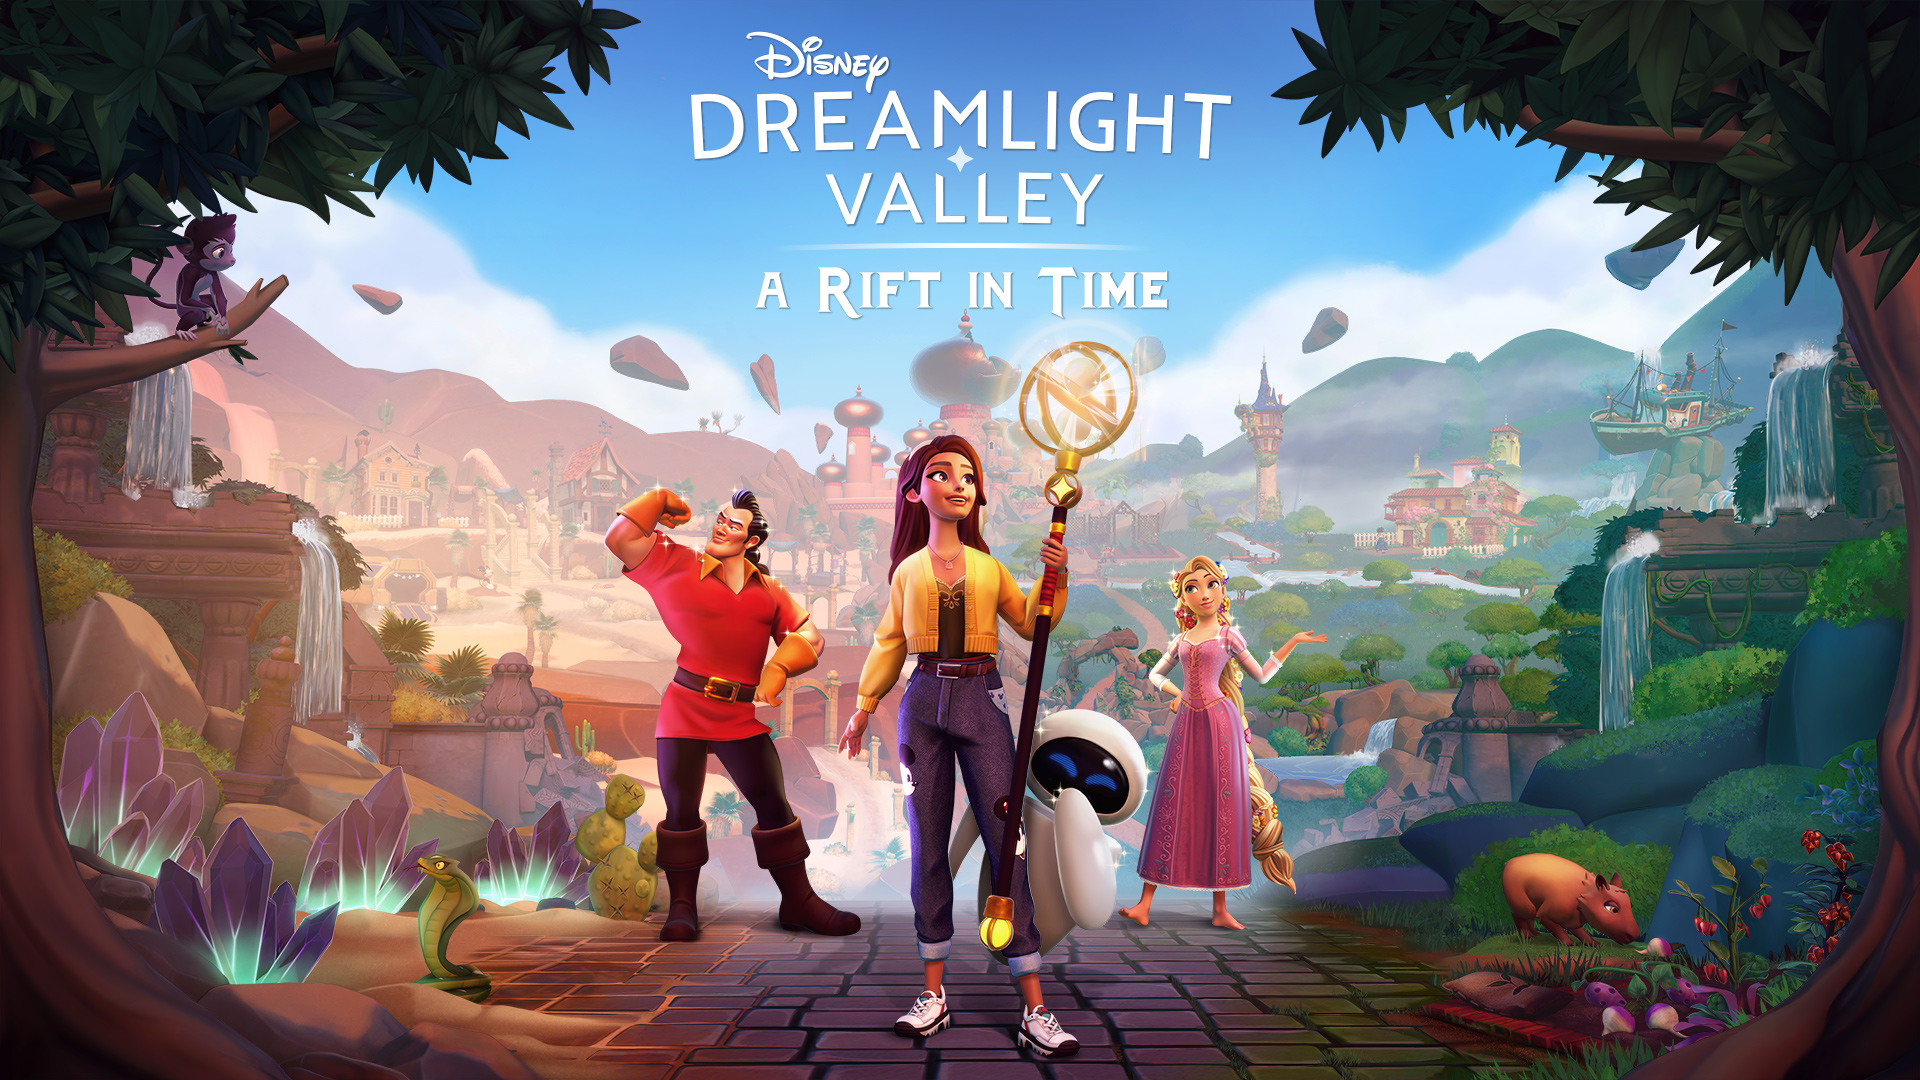 Cover art for Disney Dreamlight Valley's DLC, A Rift in Time.